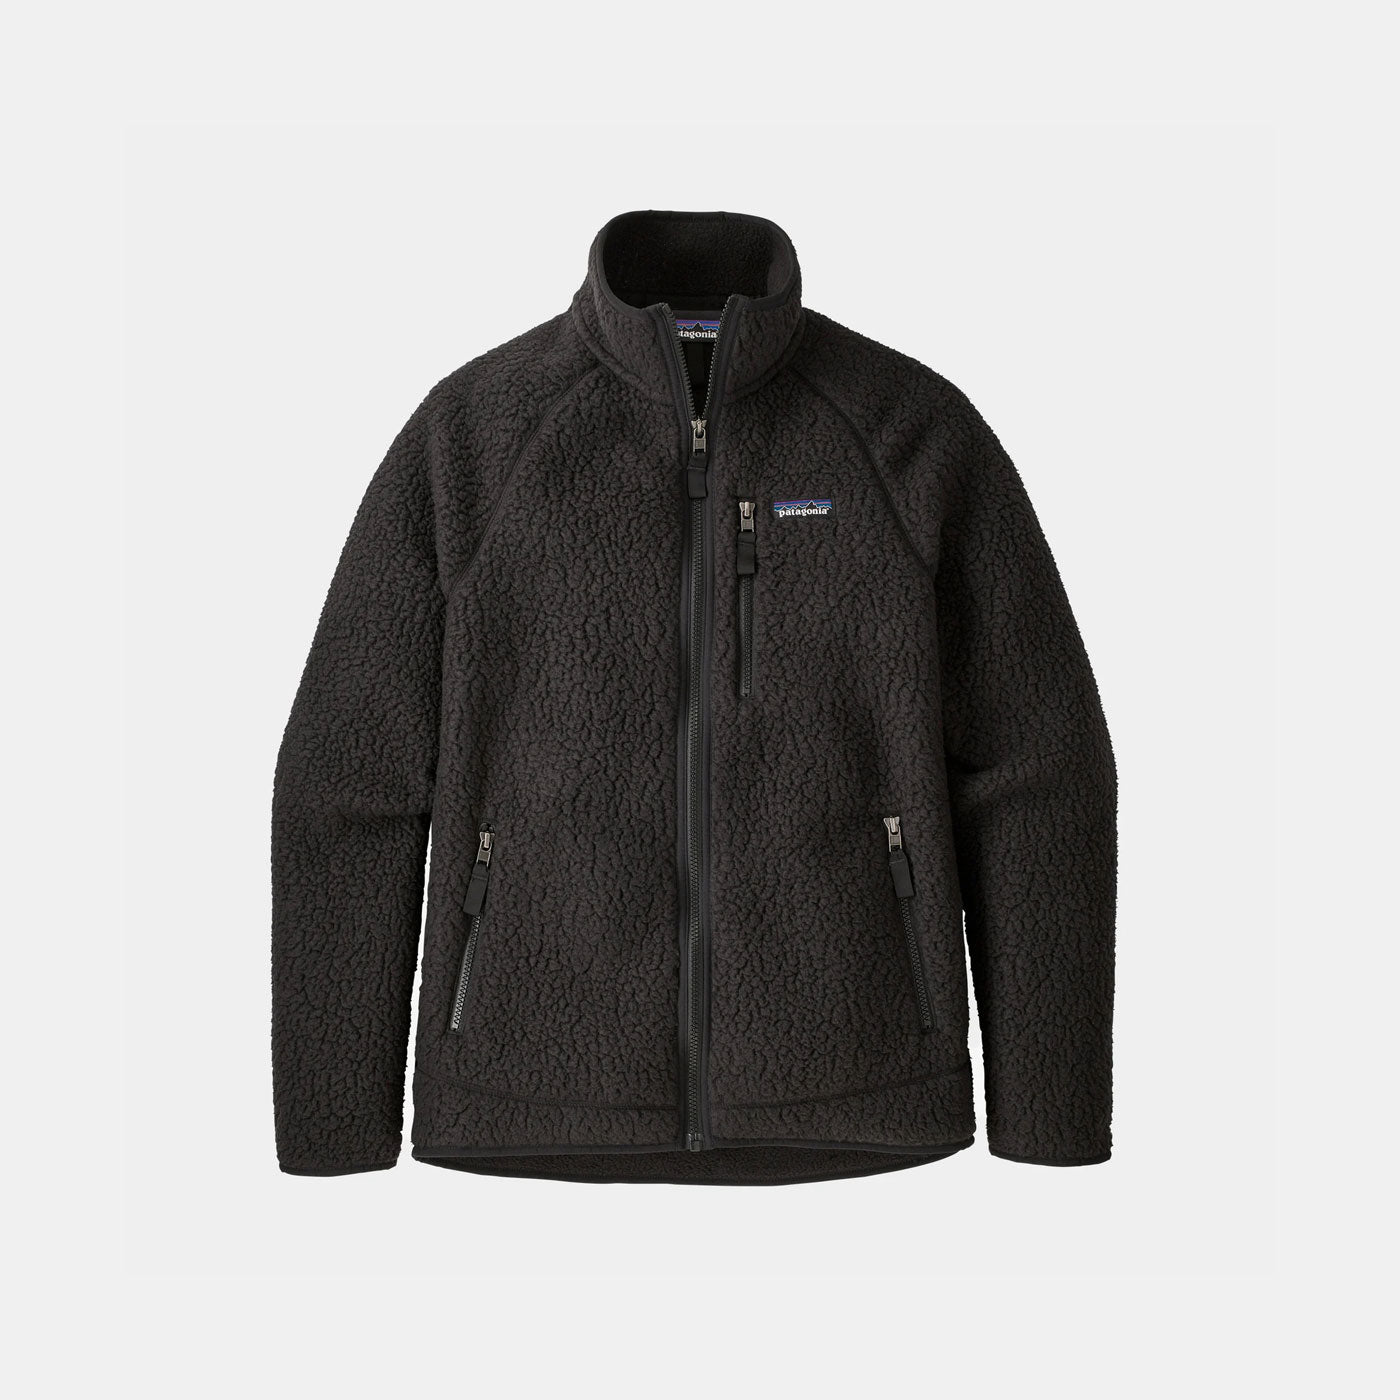 Patagonia Retro Pile Fleece Jacket - Men's 